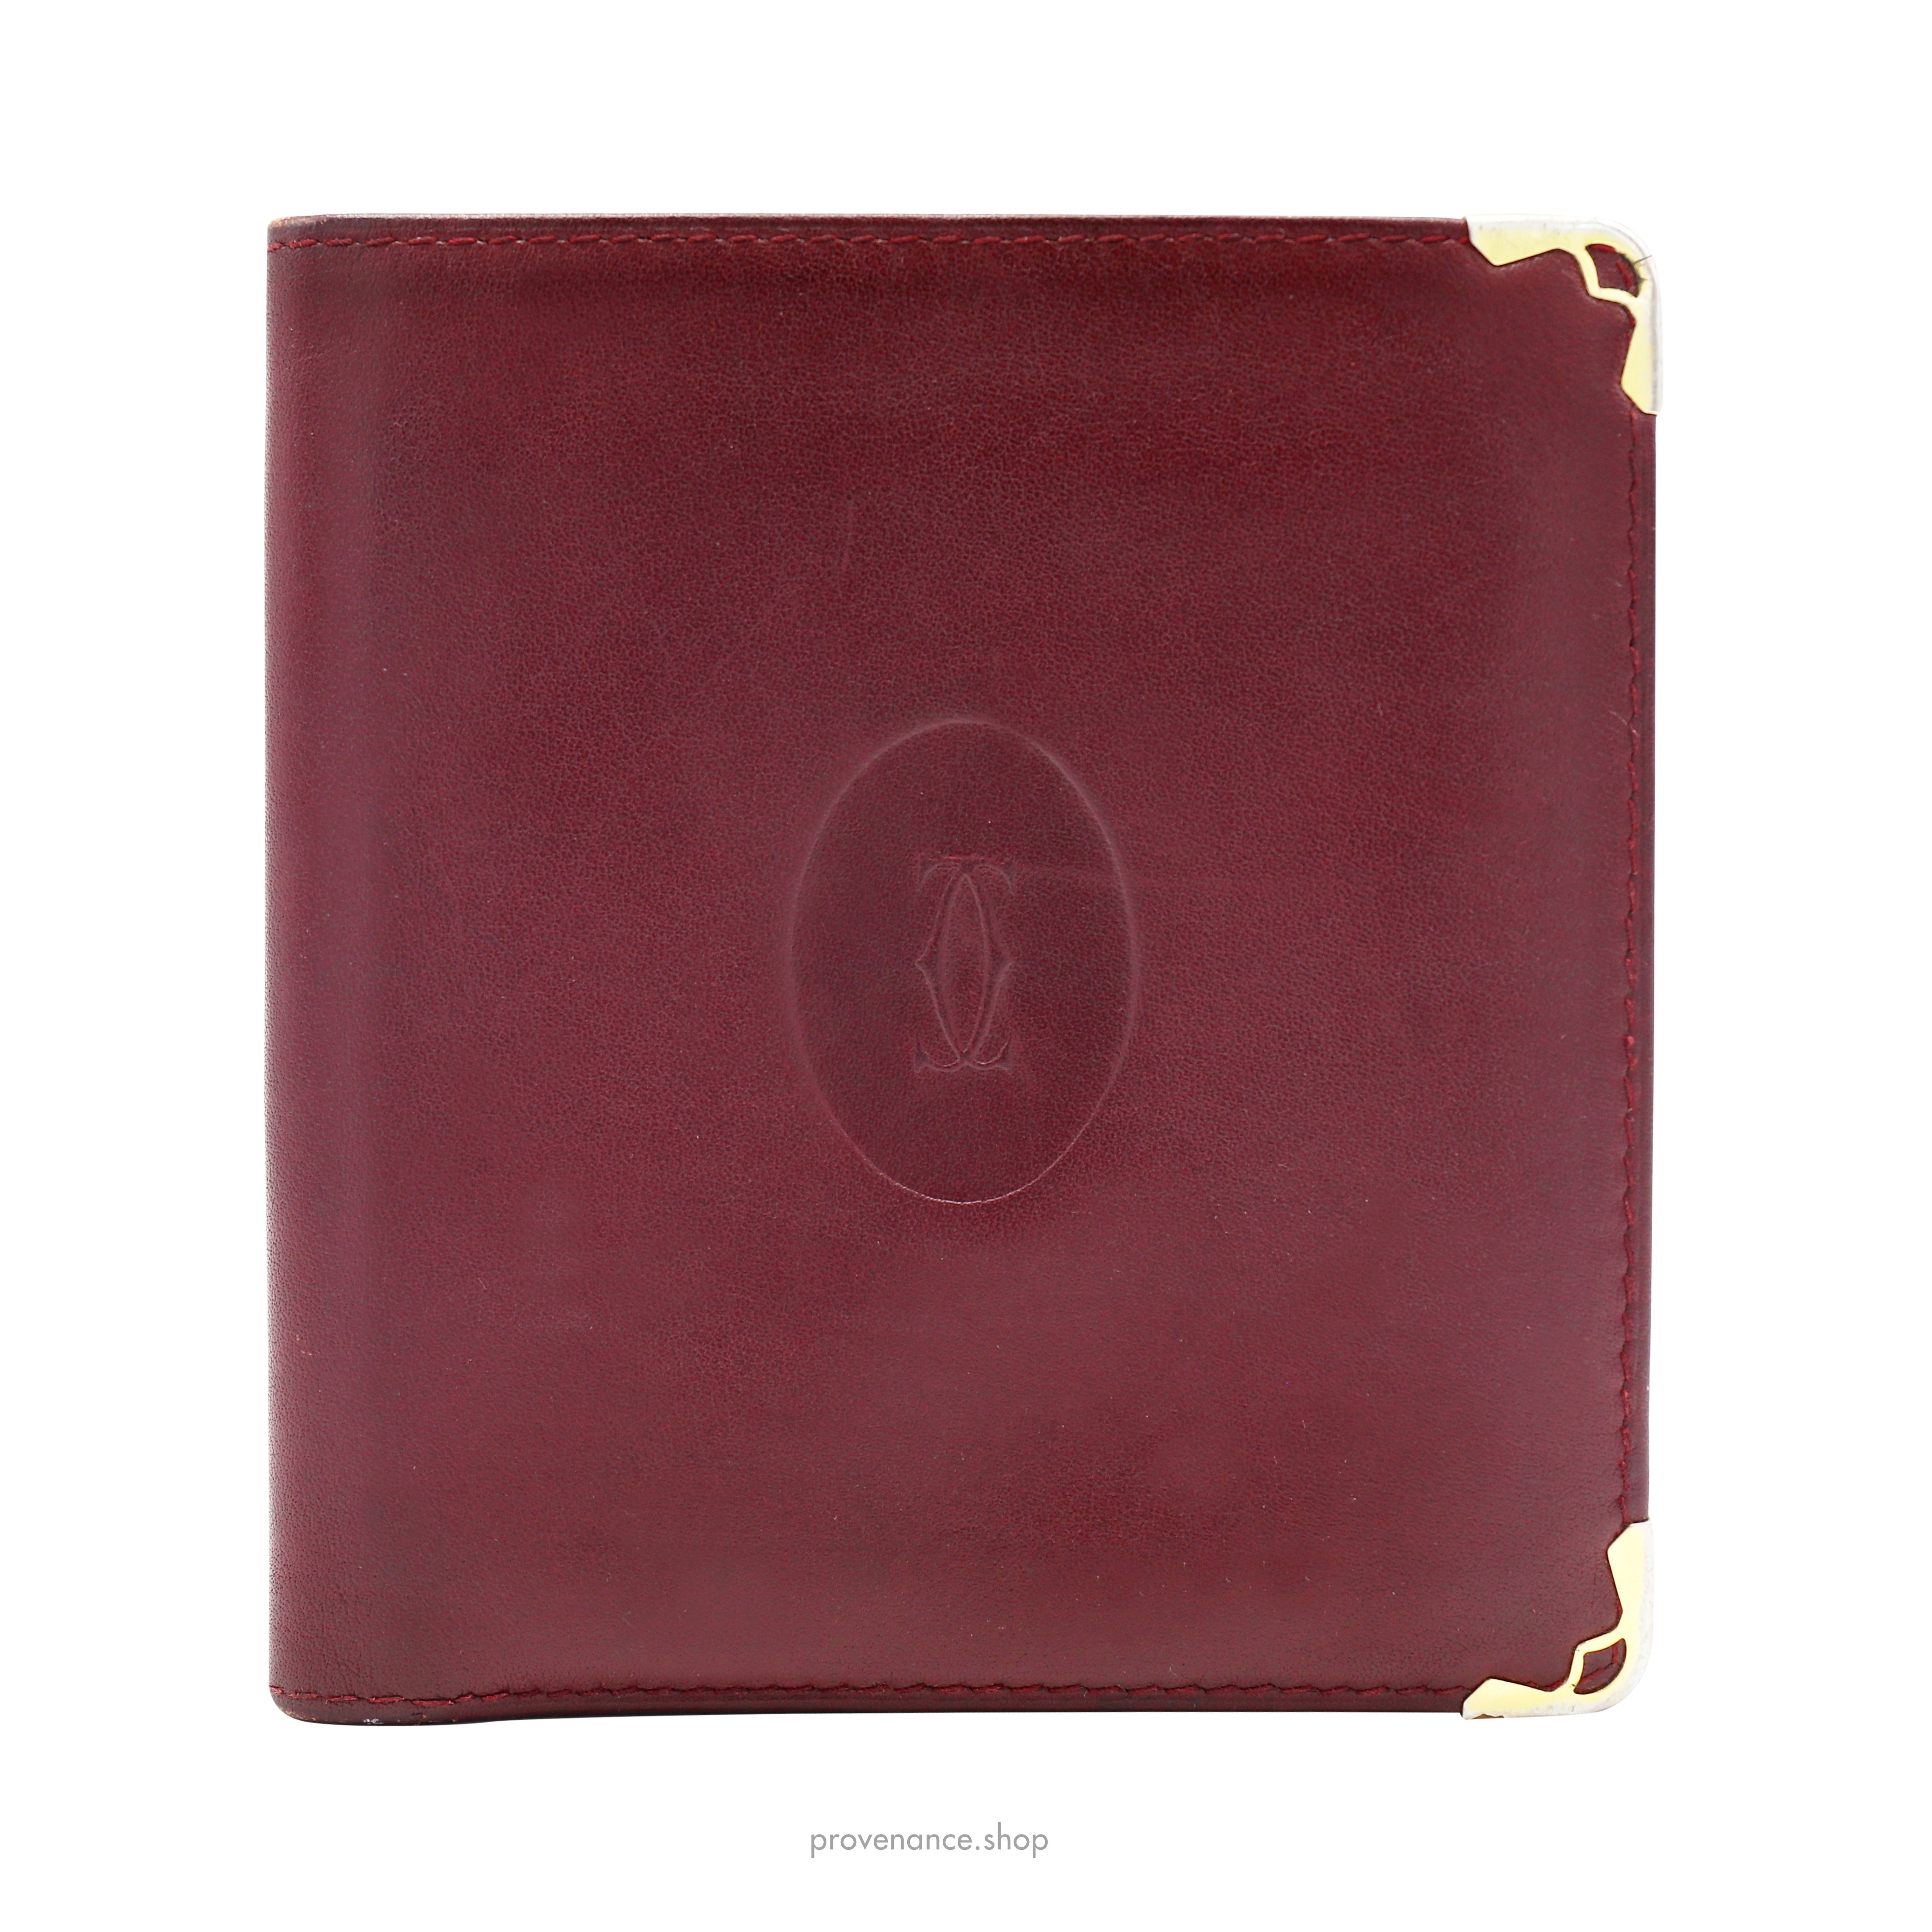 Bifold Wallet - Burgundy Calfskin Leather - 1